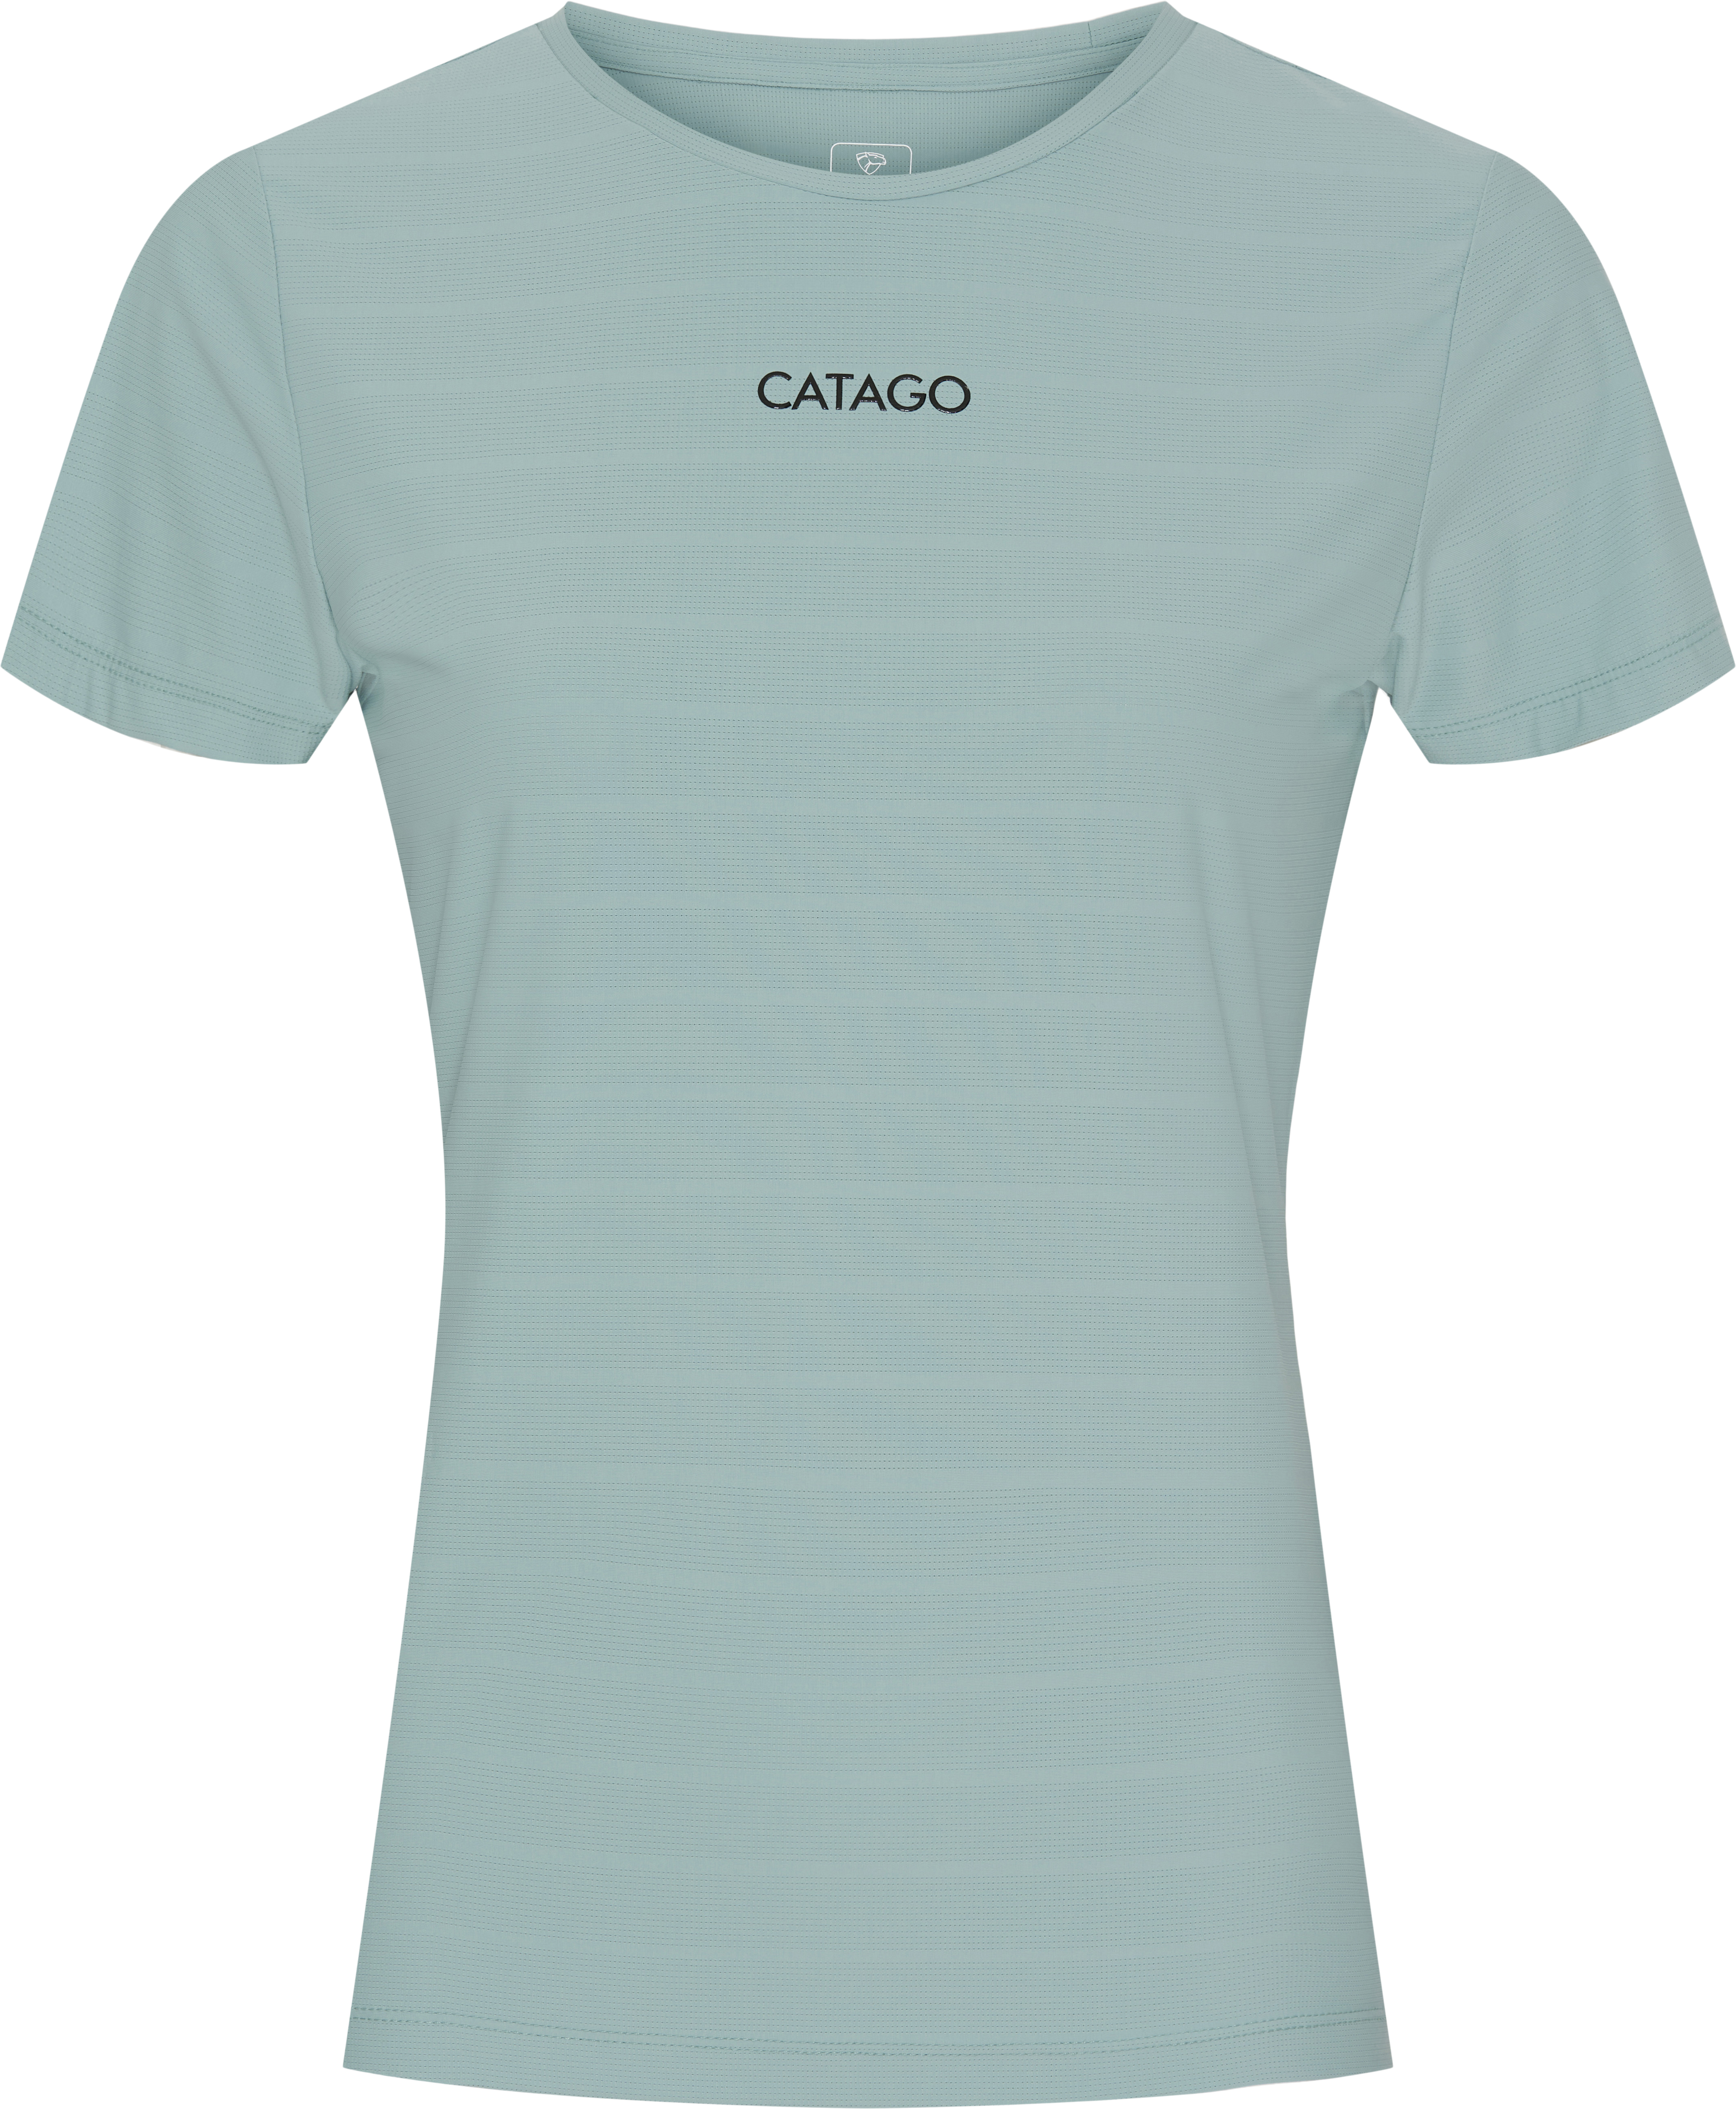 CATAGO Novel T-shirt - Stone Blue (S), Catago